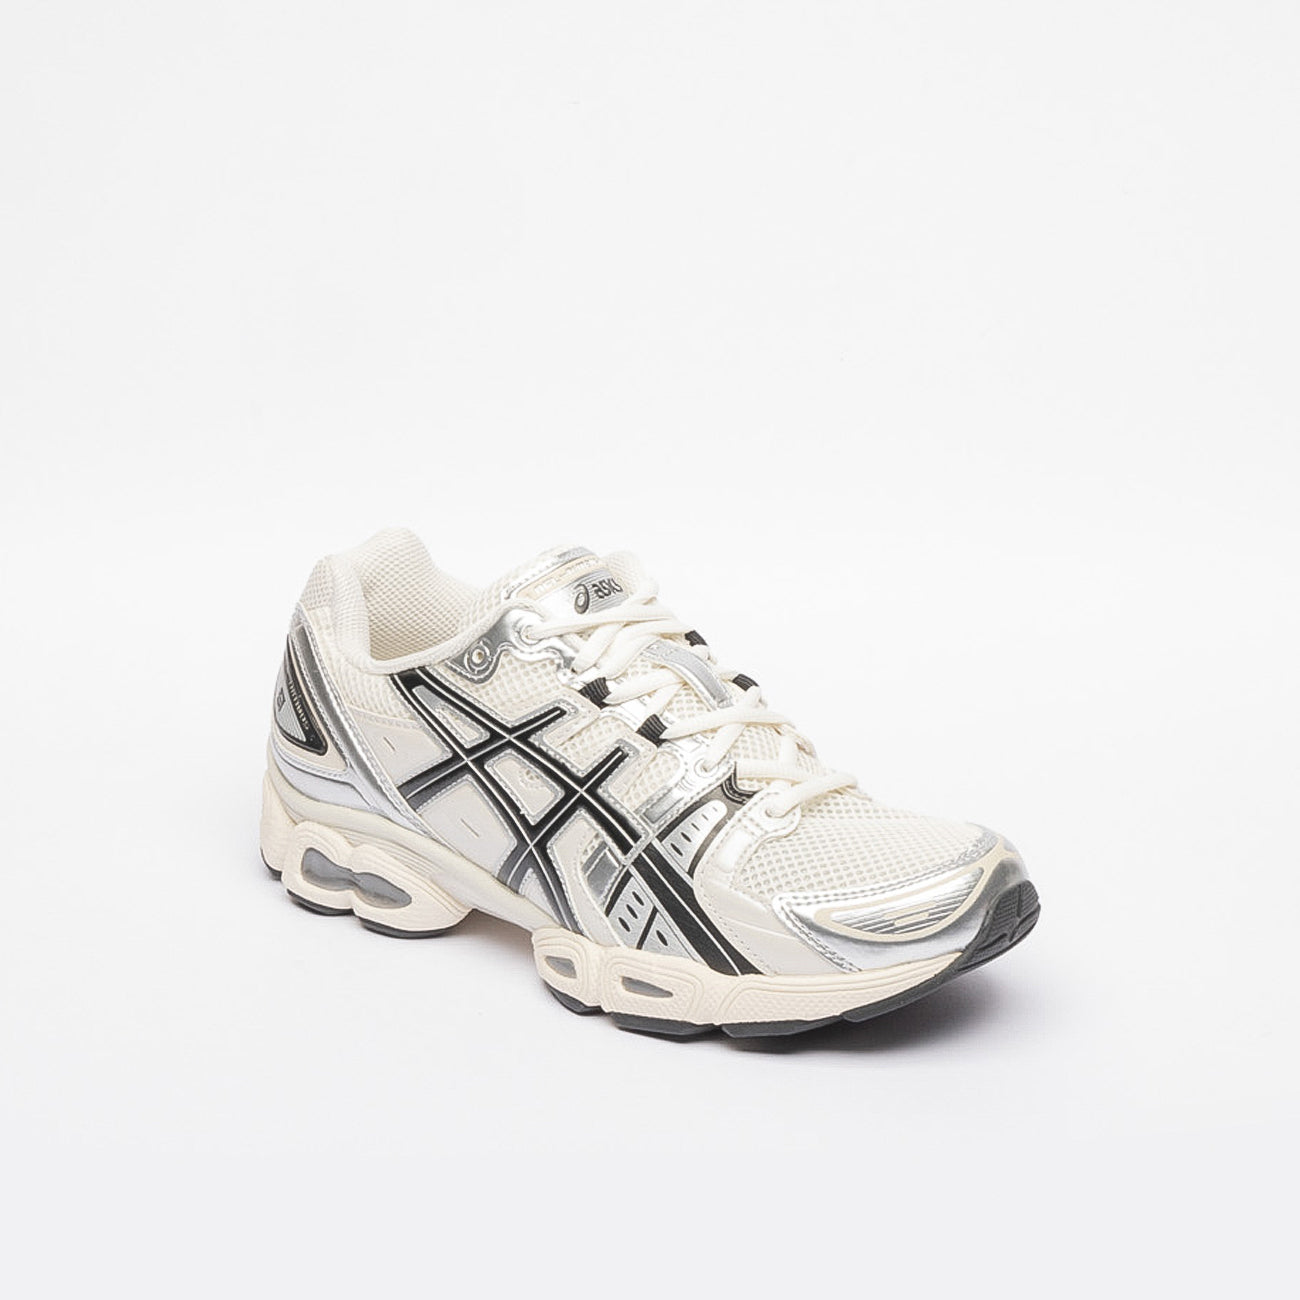 Sneaker unisex Asics Gel-Nimbus 9 in pelle nera e argento e tessuto bianco